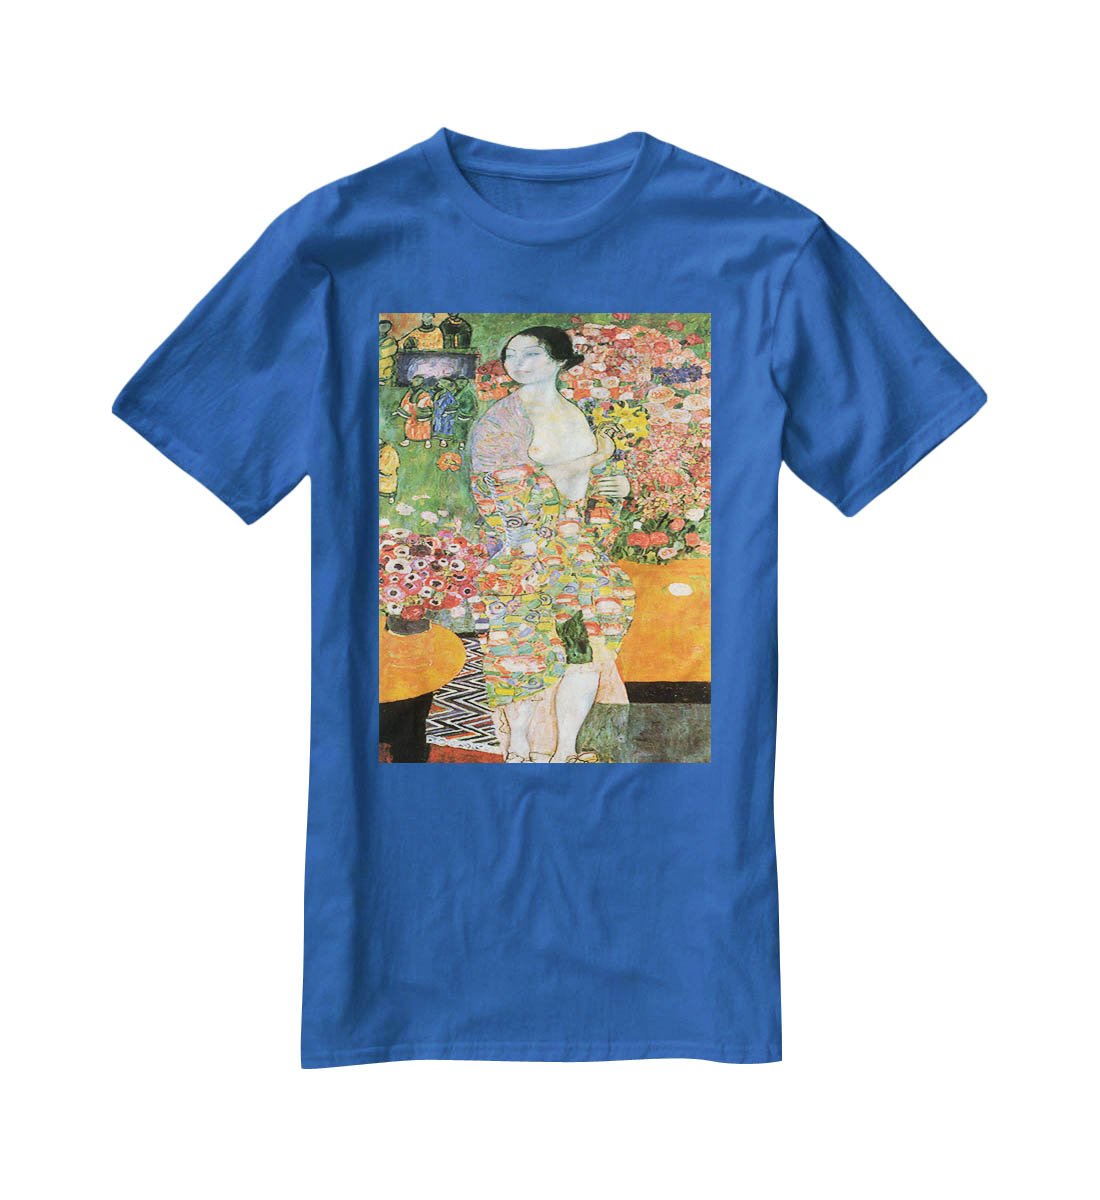 The dancer by Klimt T-Shirt - Canvas Art Rocks - 2